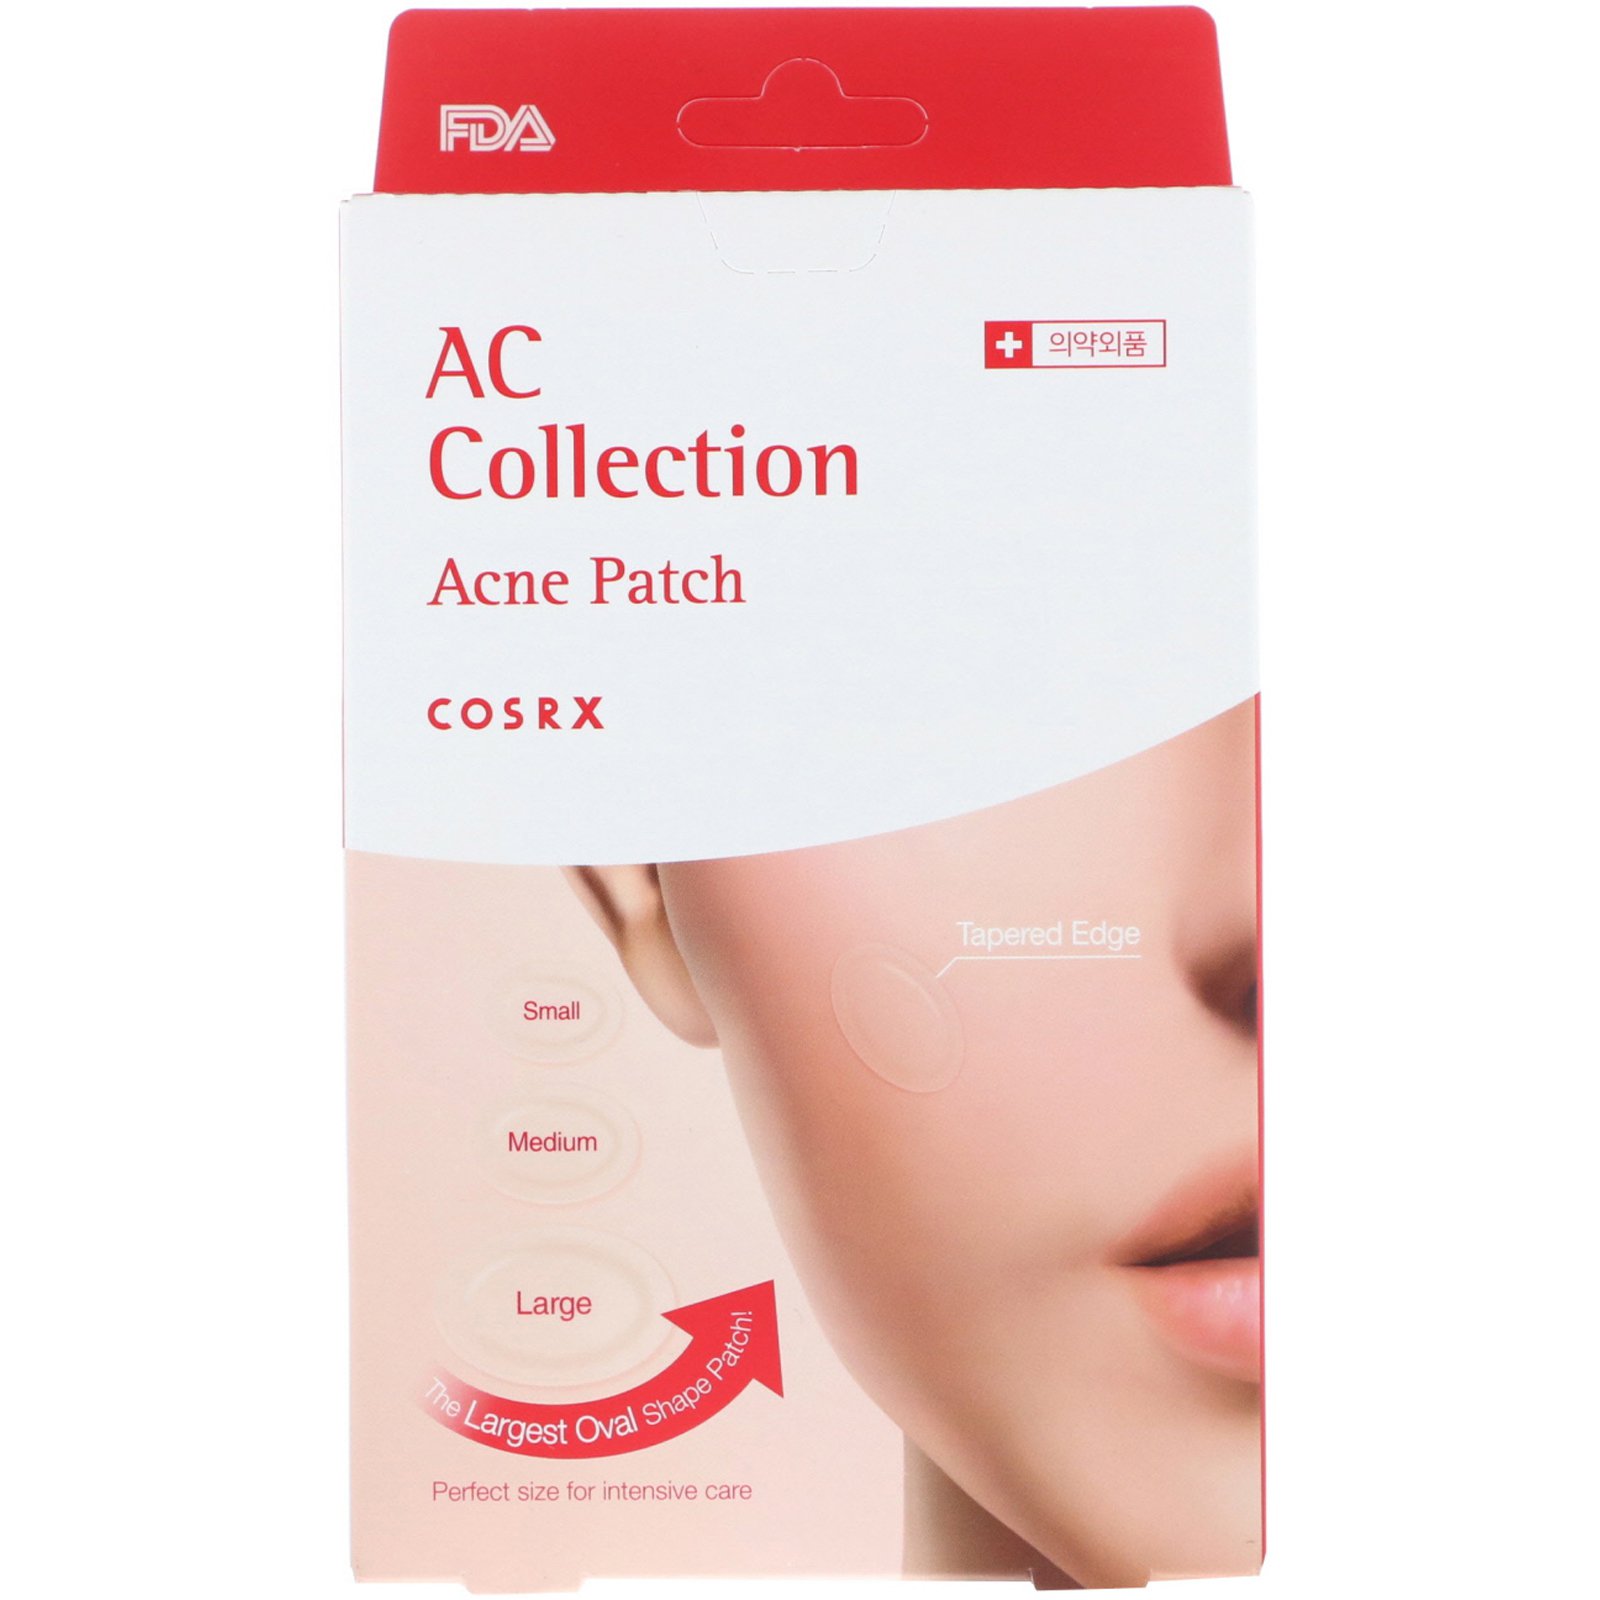 Collection patch. AC collection acne Patch 26шт. COSRX патчи от акне AC collection Patch 26 штук. COSRX AC collection acne Patch. Пластырь от прыщей корейский.